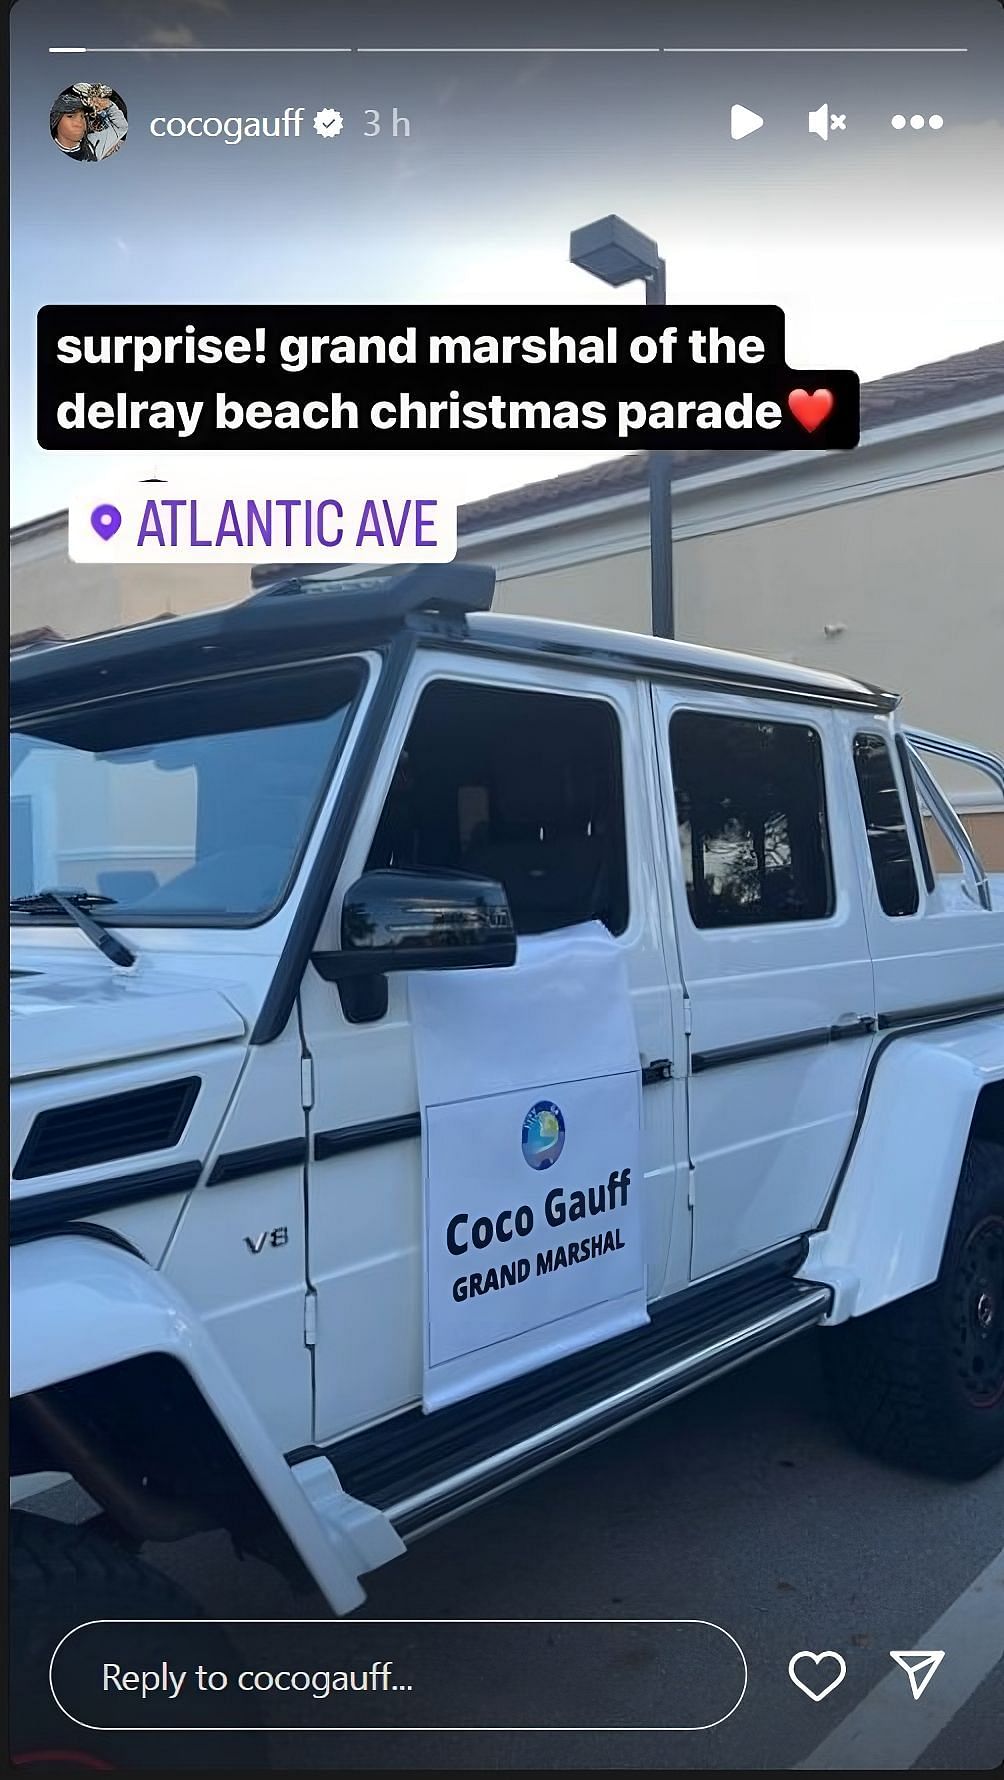 Coco Gauff on Instagram